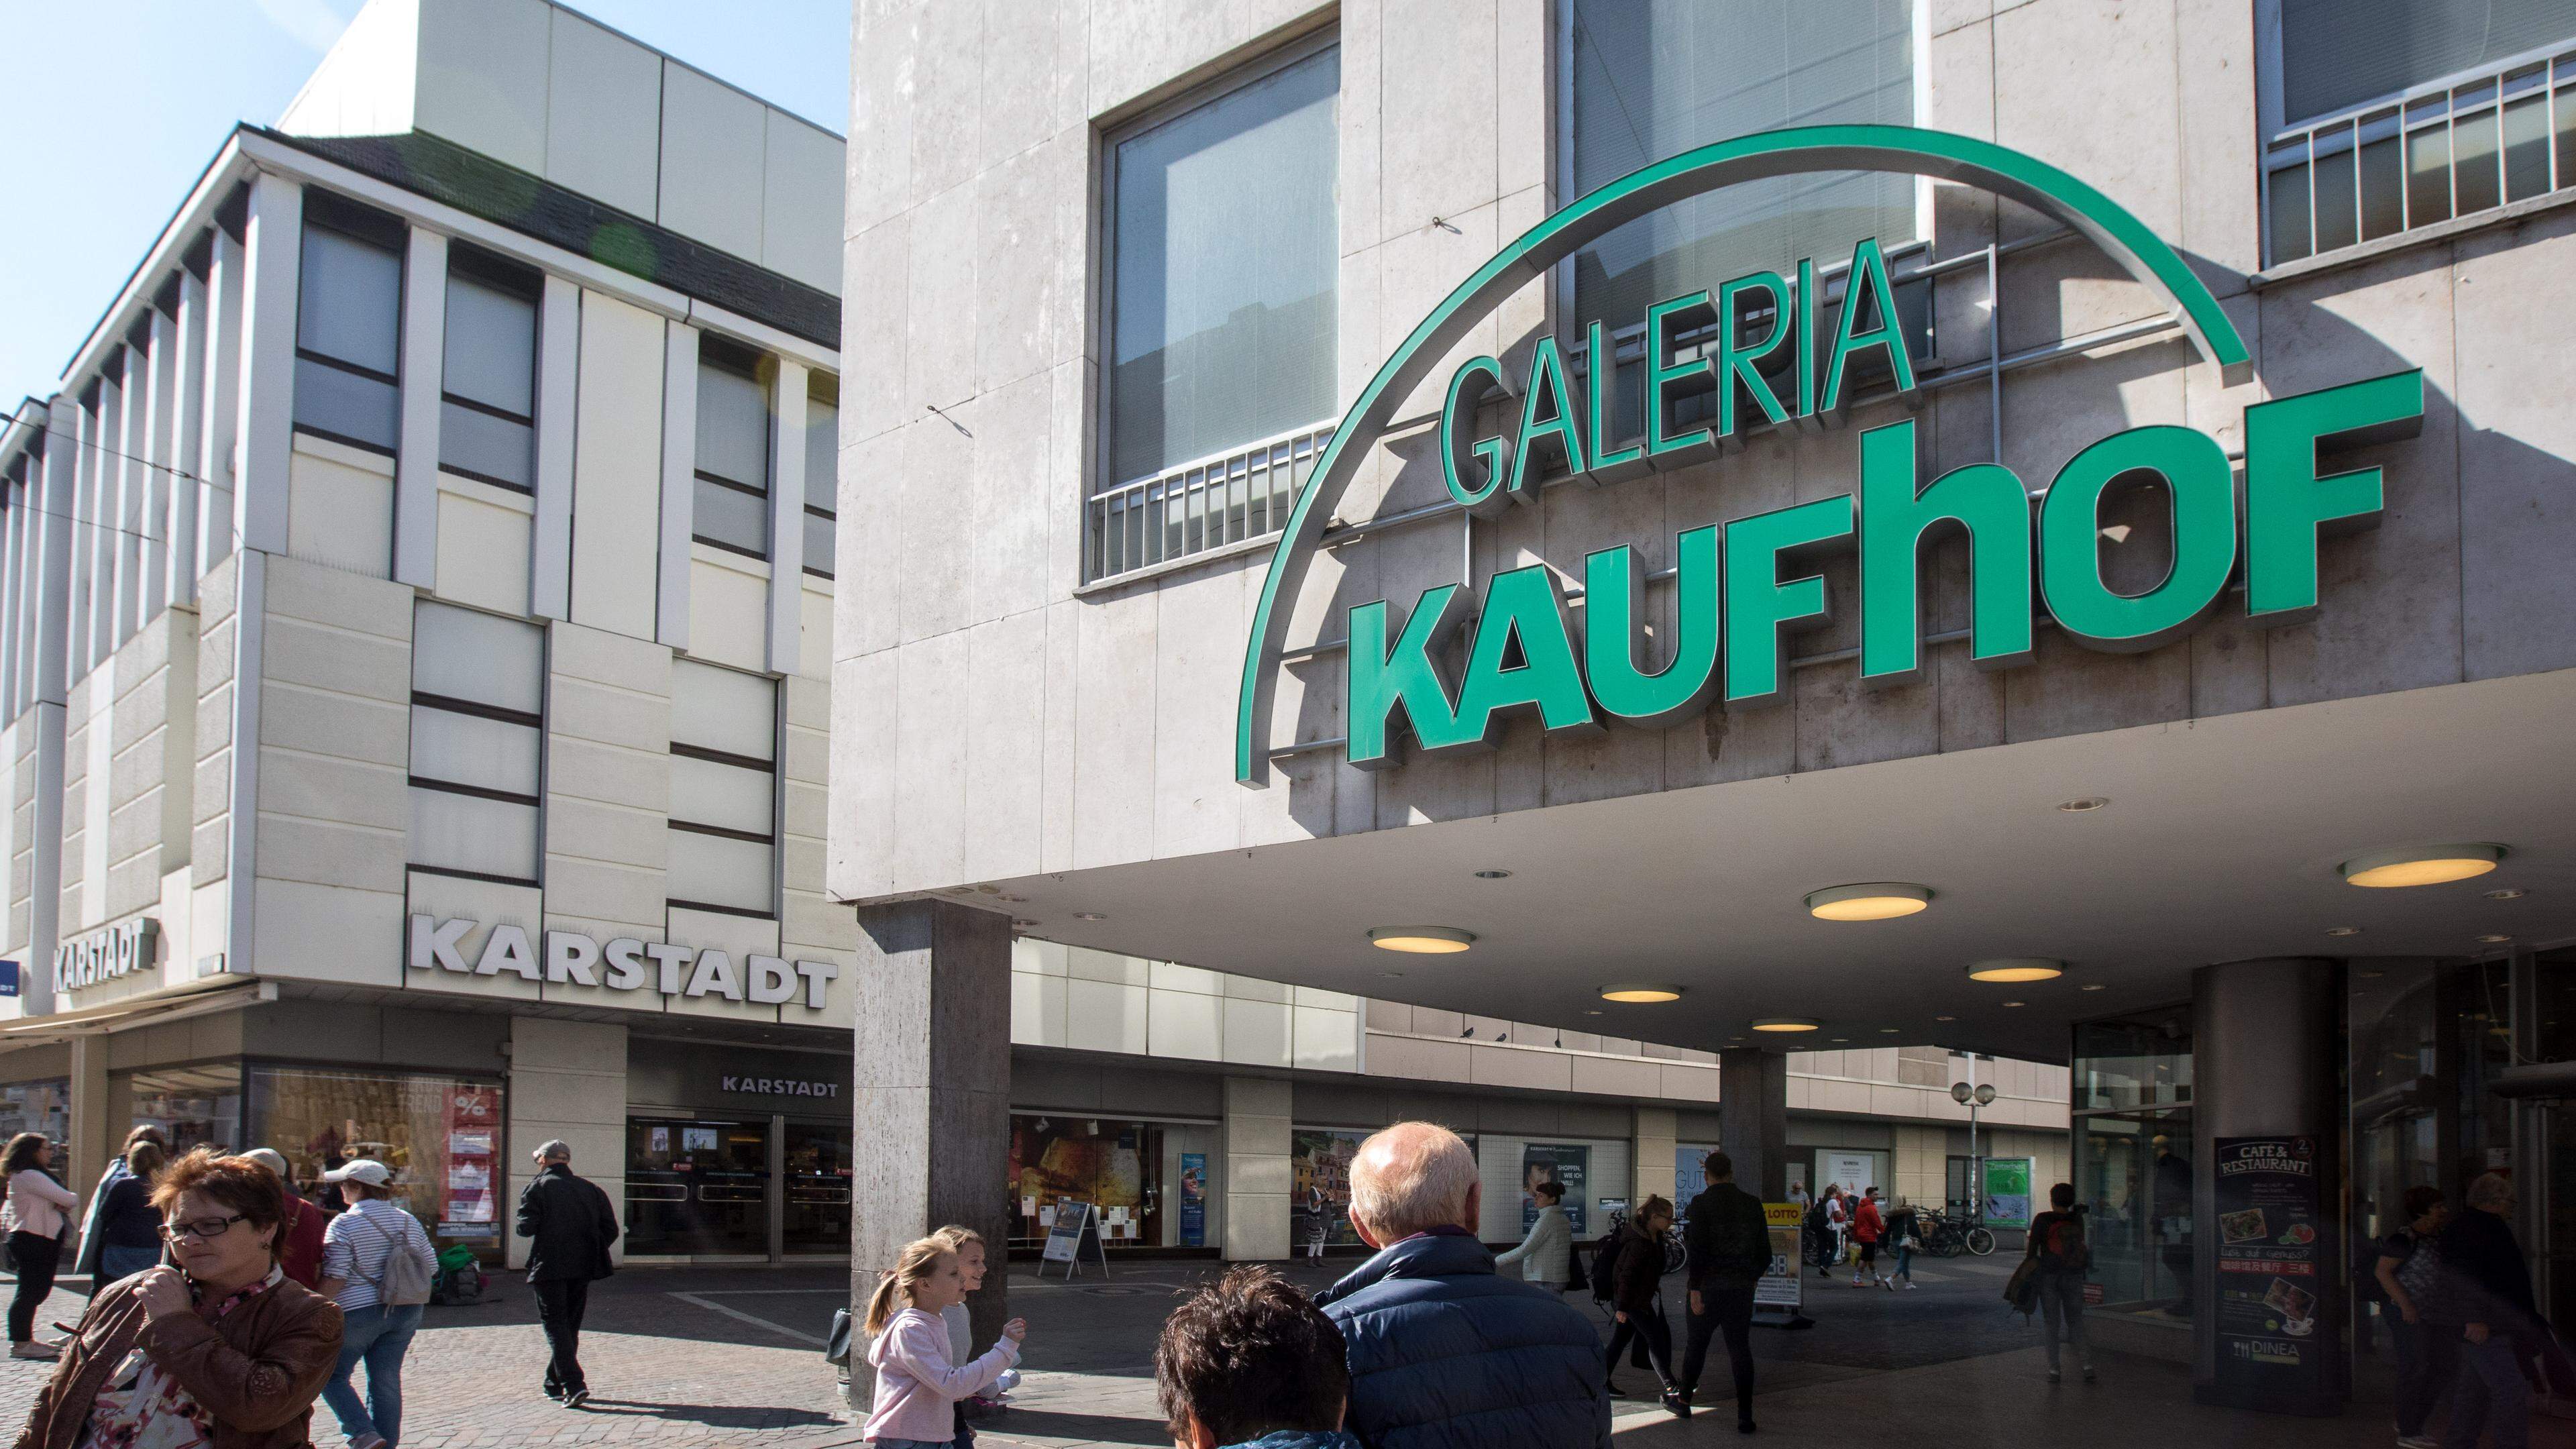 28.9. Trier / Karstadt-Galeria Kaufhof Fusion foto:Guy Jallay